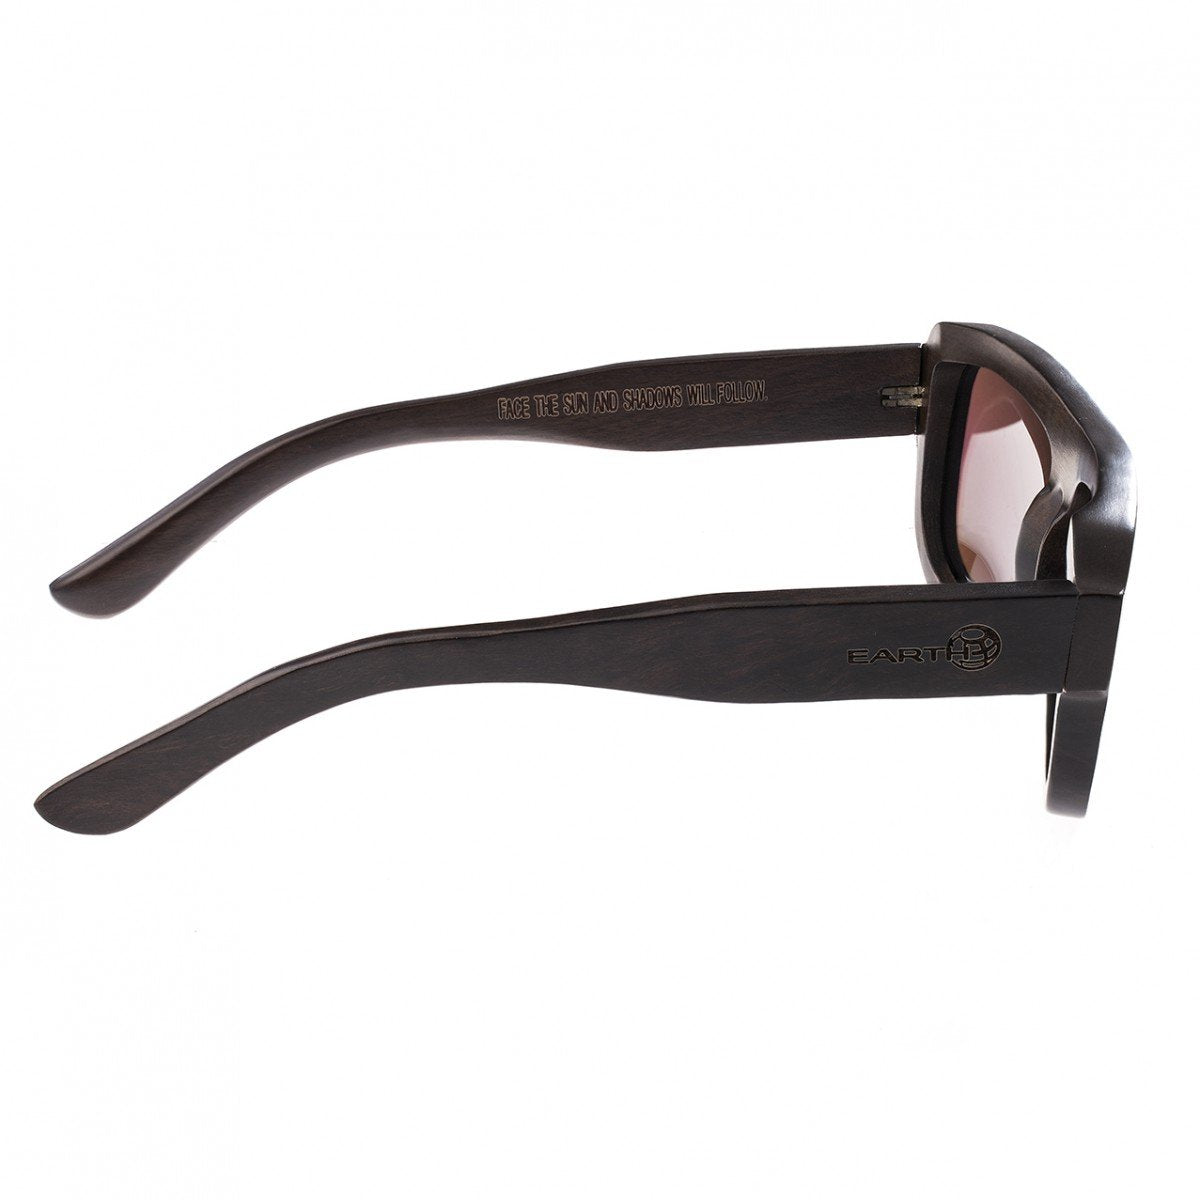 Earth Wood Daytona Polarized Sunglasses - Espresso/Green - ESG025E